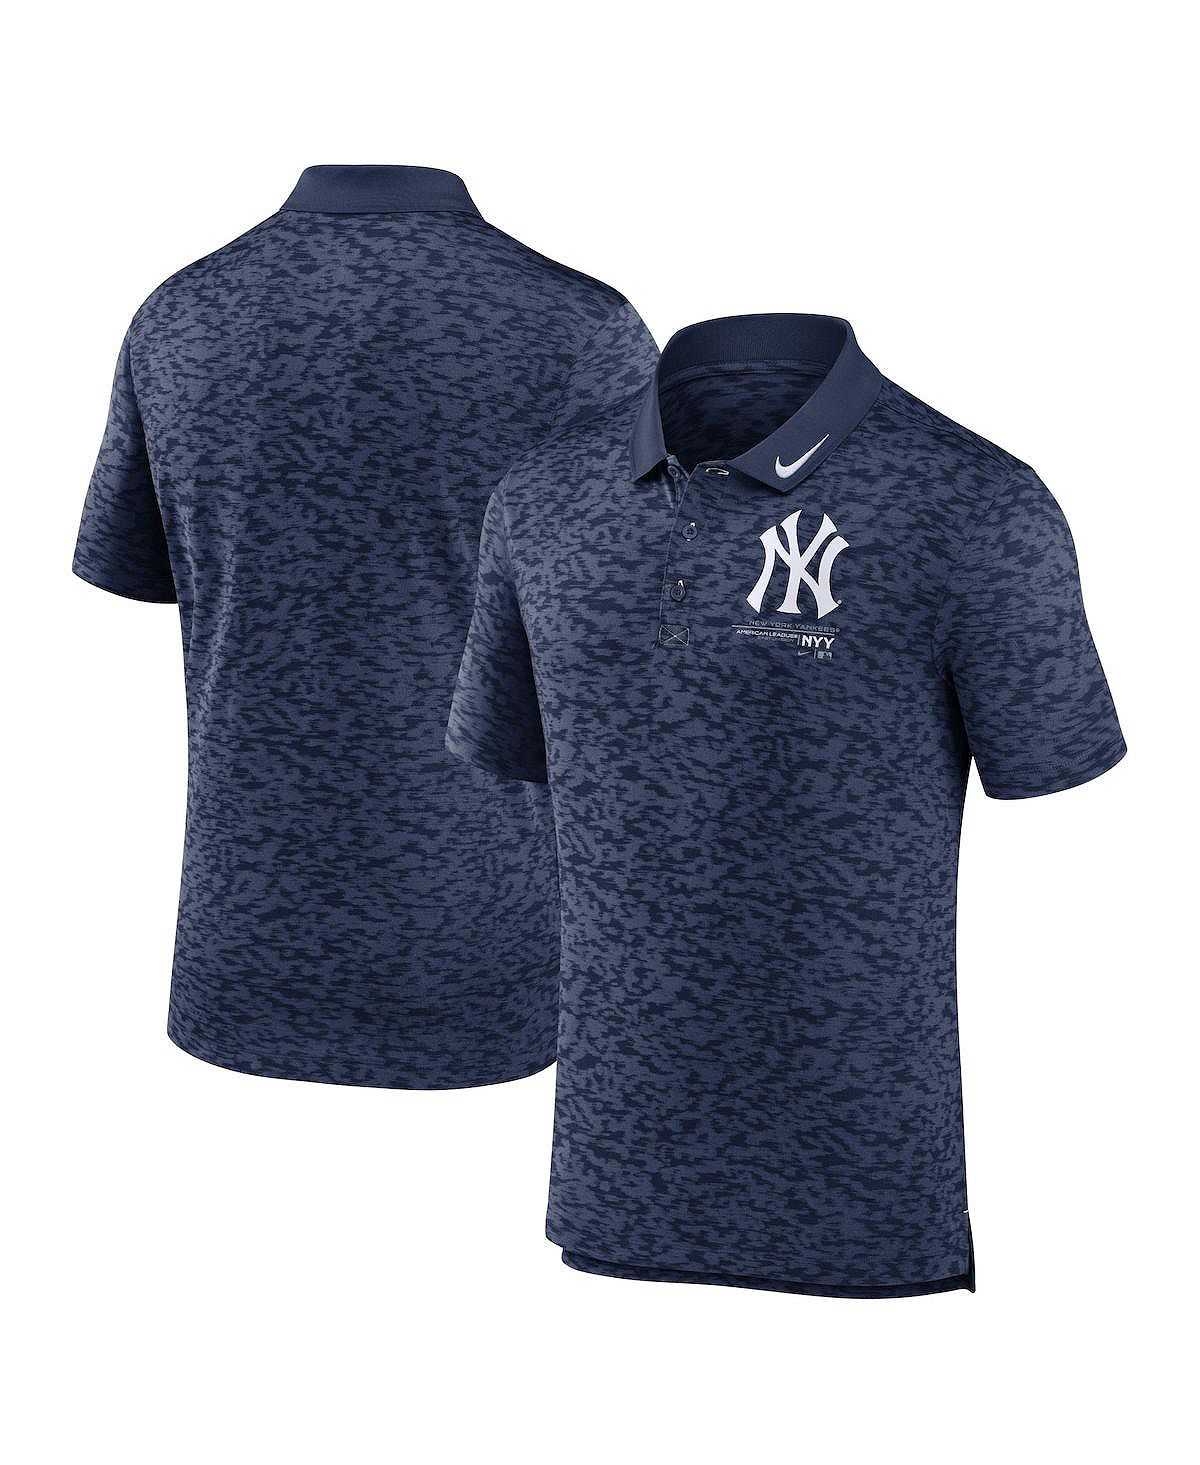 shipton vicky new york level 3 Мужская темно-синяя рубашка-поло New York Yankees Next Level Nike